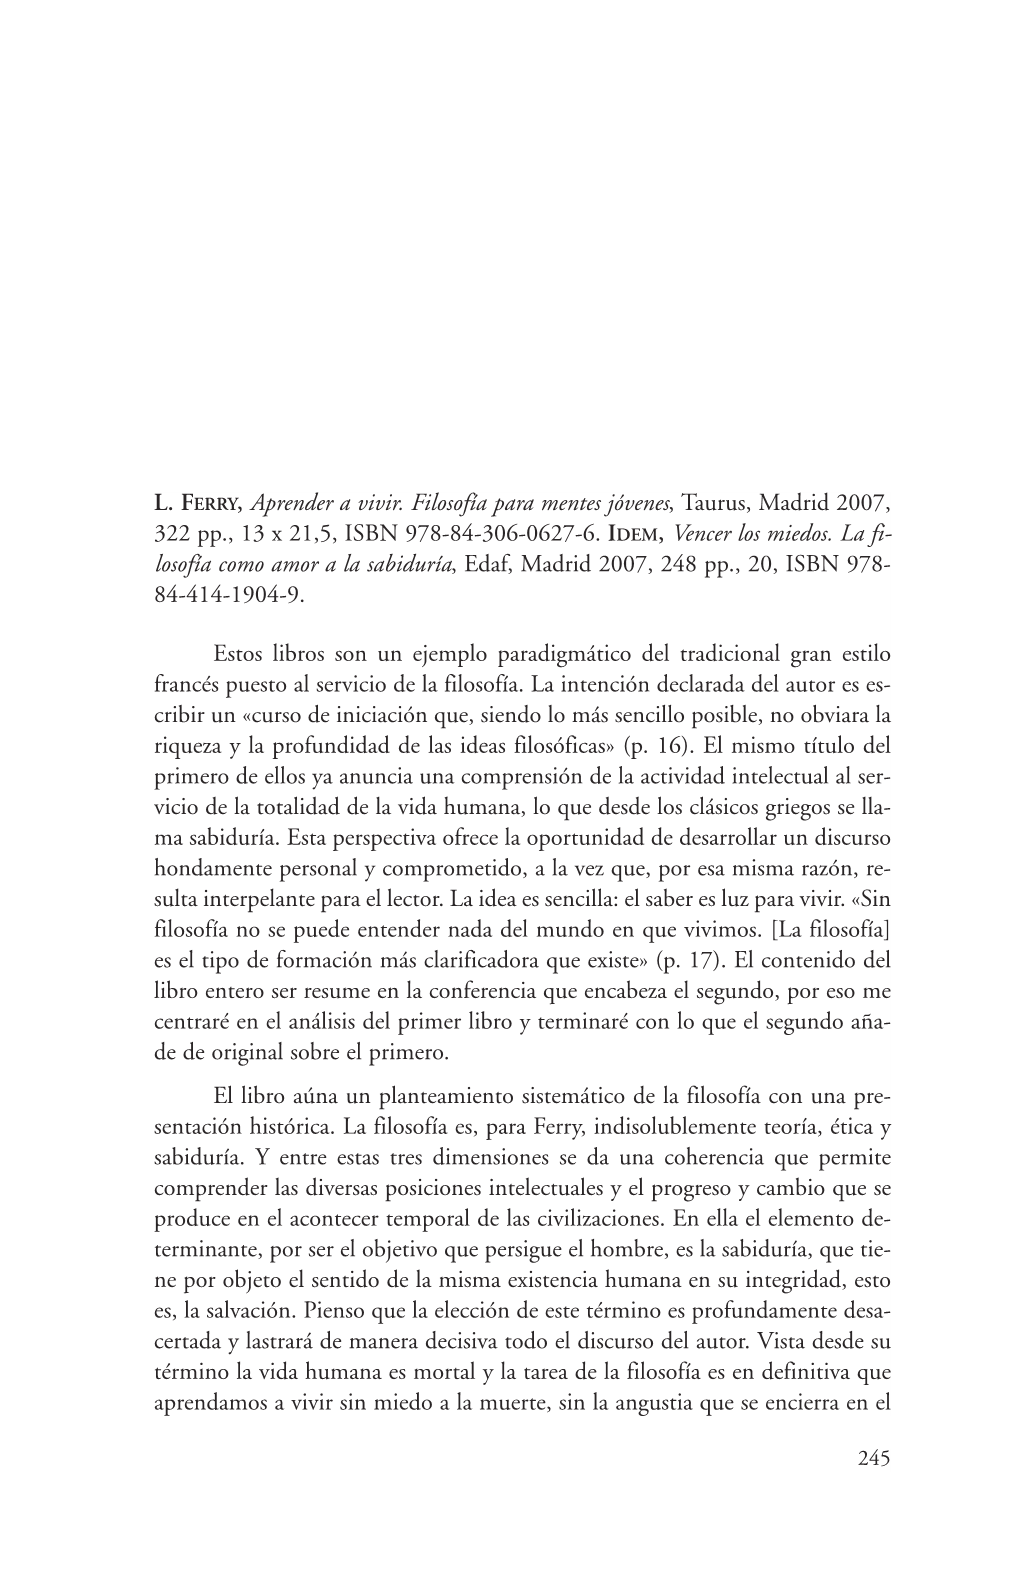 L. FERRY, Aprender a Vivir. Filosofía Para Mentes Jóvenes, Taurus, Madrid 2007, 322 Pp., 13 X 21,5, ISBN 978-84-306-0627-6